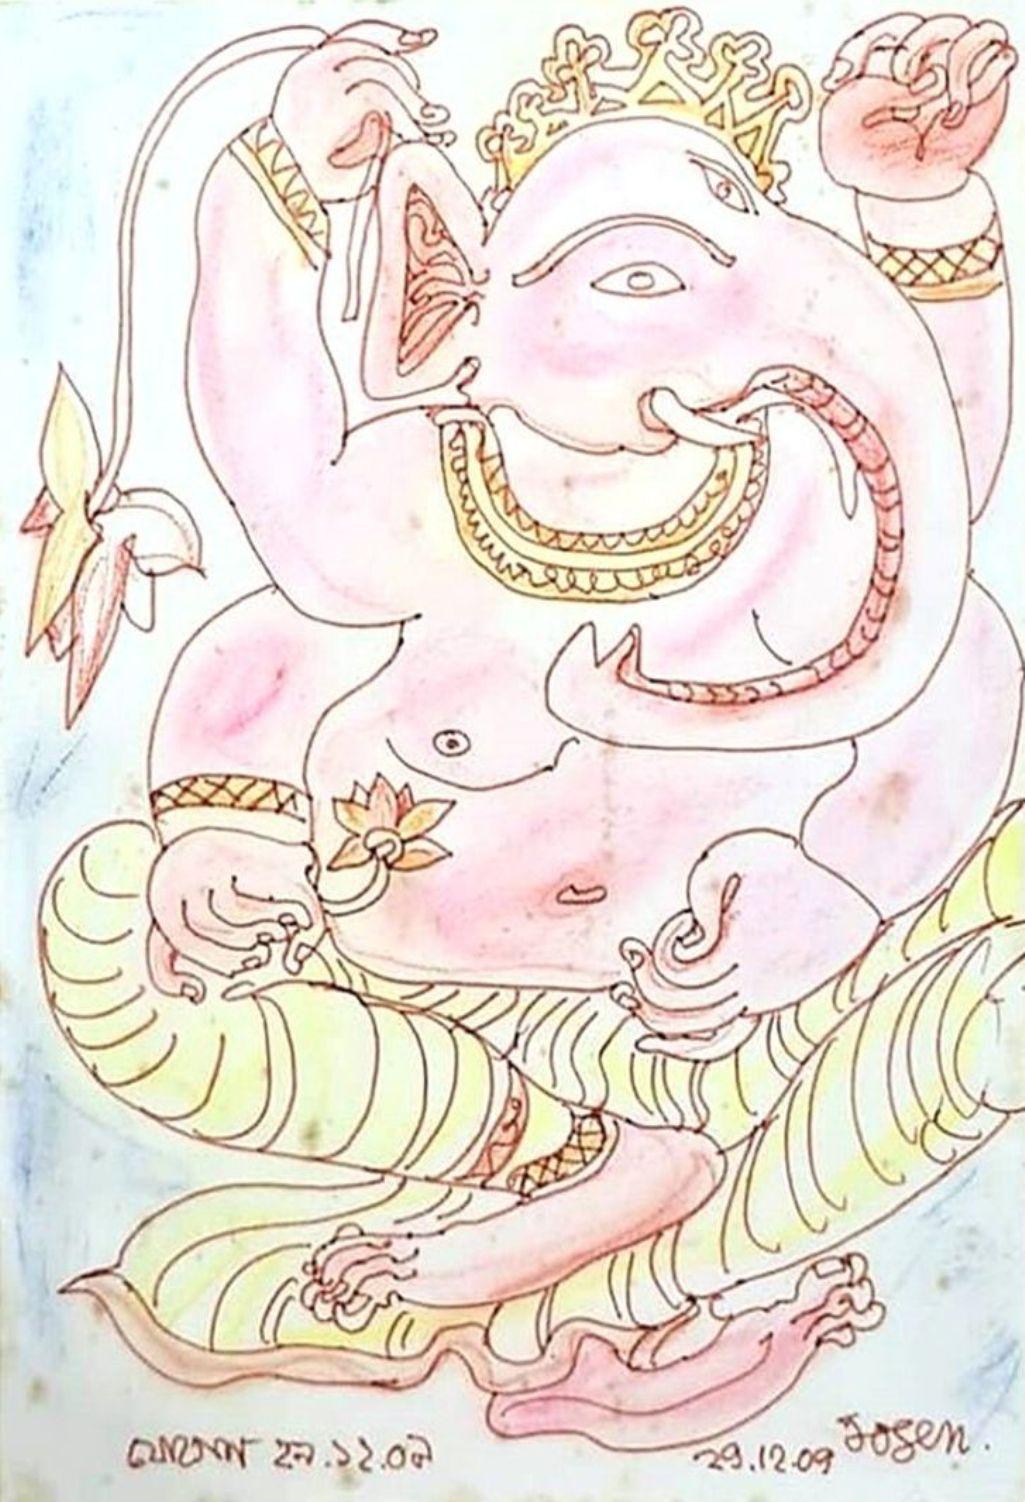 Jogen Chowdhury - Ganesha - 16.5 x 12 Inches (unframed)  
Dry Pastel on Paper (Framed & Delivered)

In the Hindu epic Mahabharata, Bakasur is a Rakshasa (demon) killed by Bhima. The demon lived near the city of Ekachakra (sometimes Chakranagari),